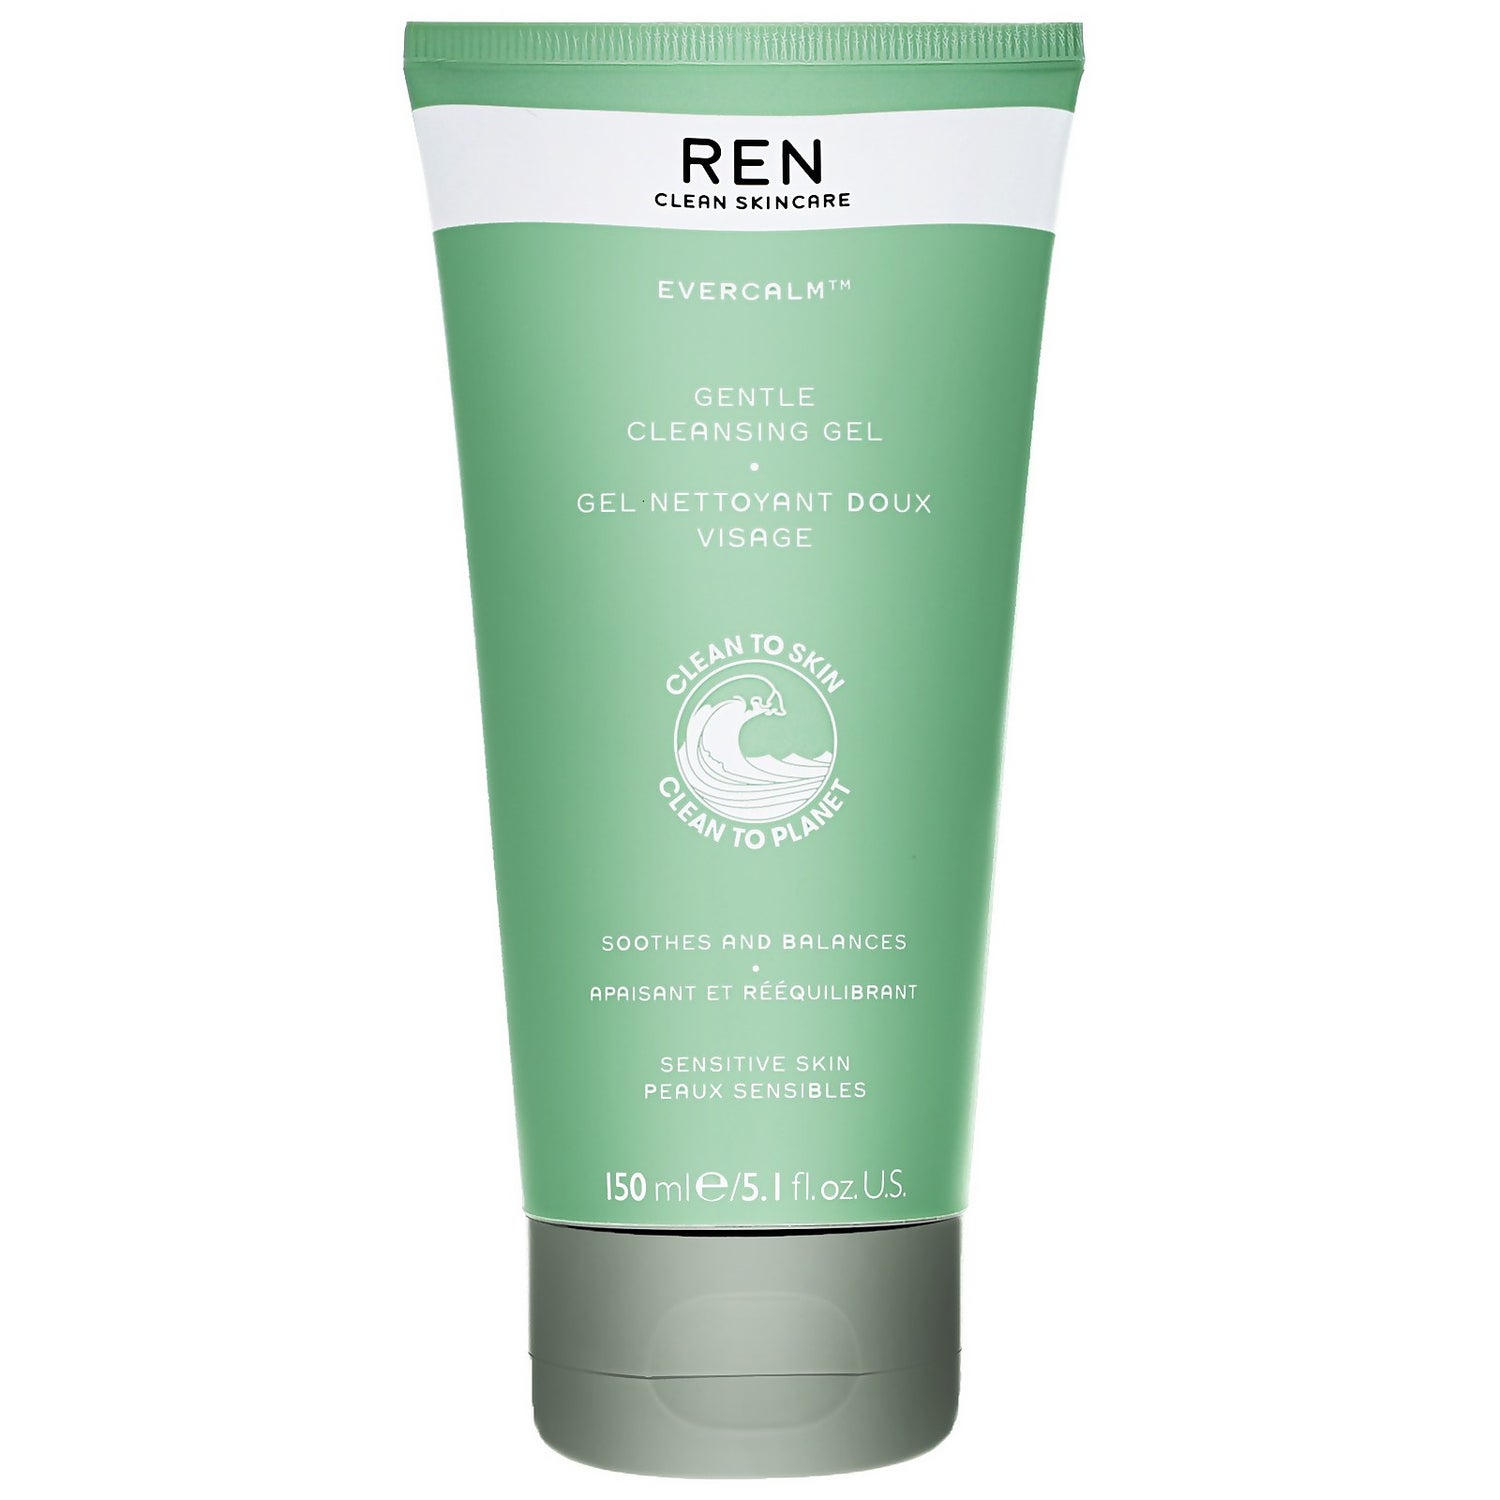 allbeauty - Clean fl.oz. Evercalm 150ml REN Face Gel 5.1 / Gentle Cleansing Skincare